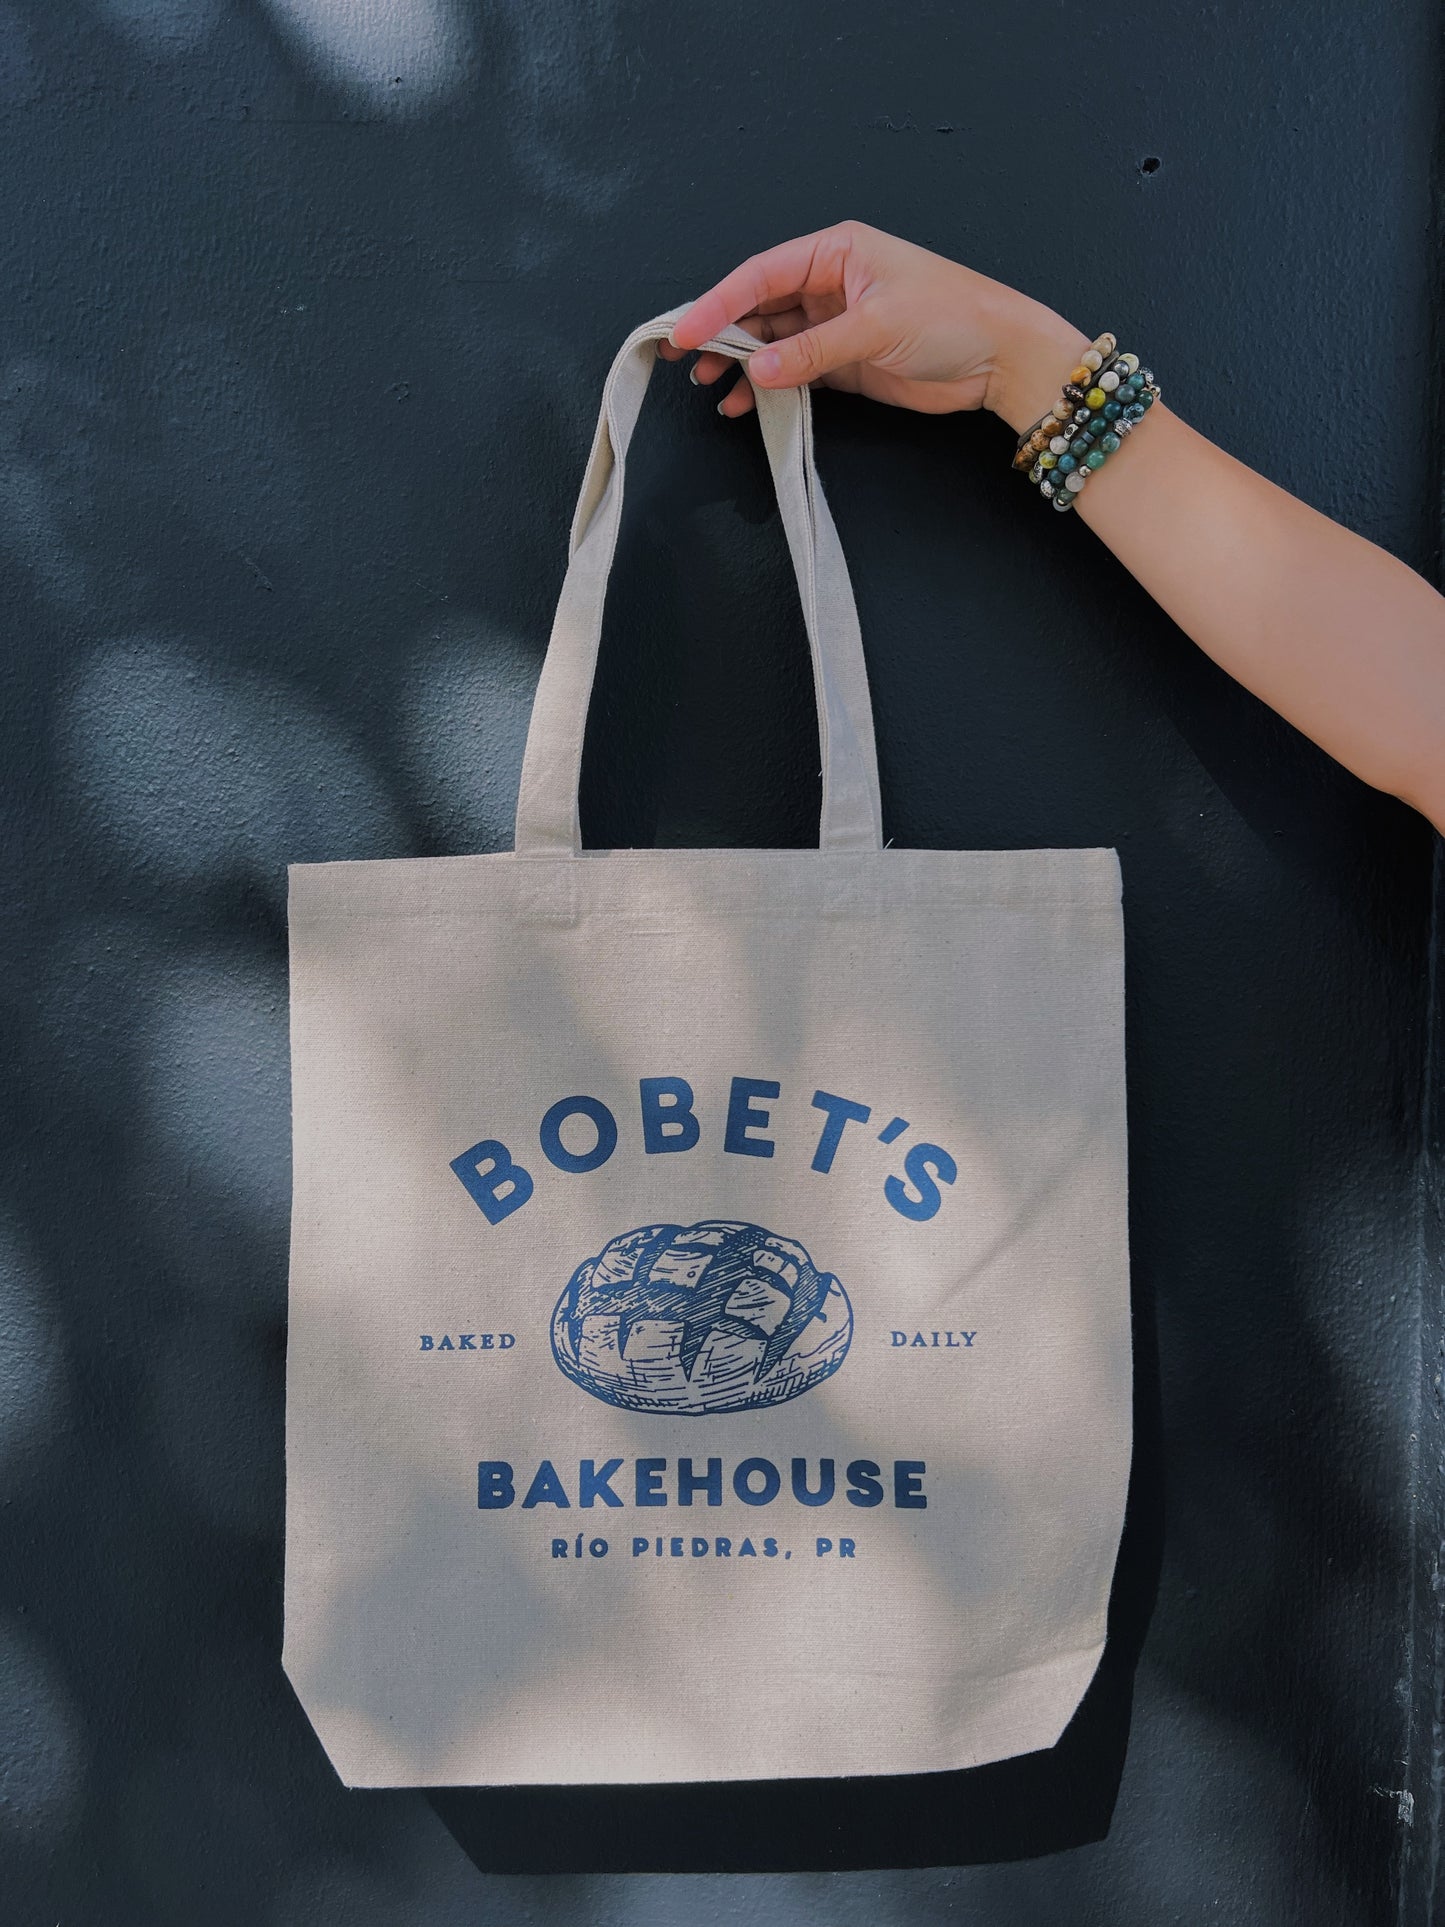 BOBET’s Bakehouse Tote Bag